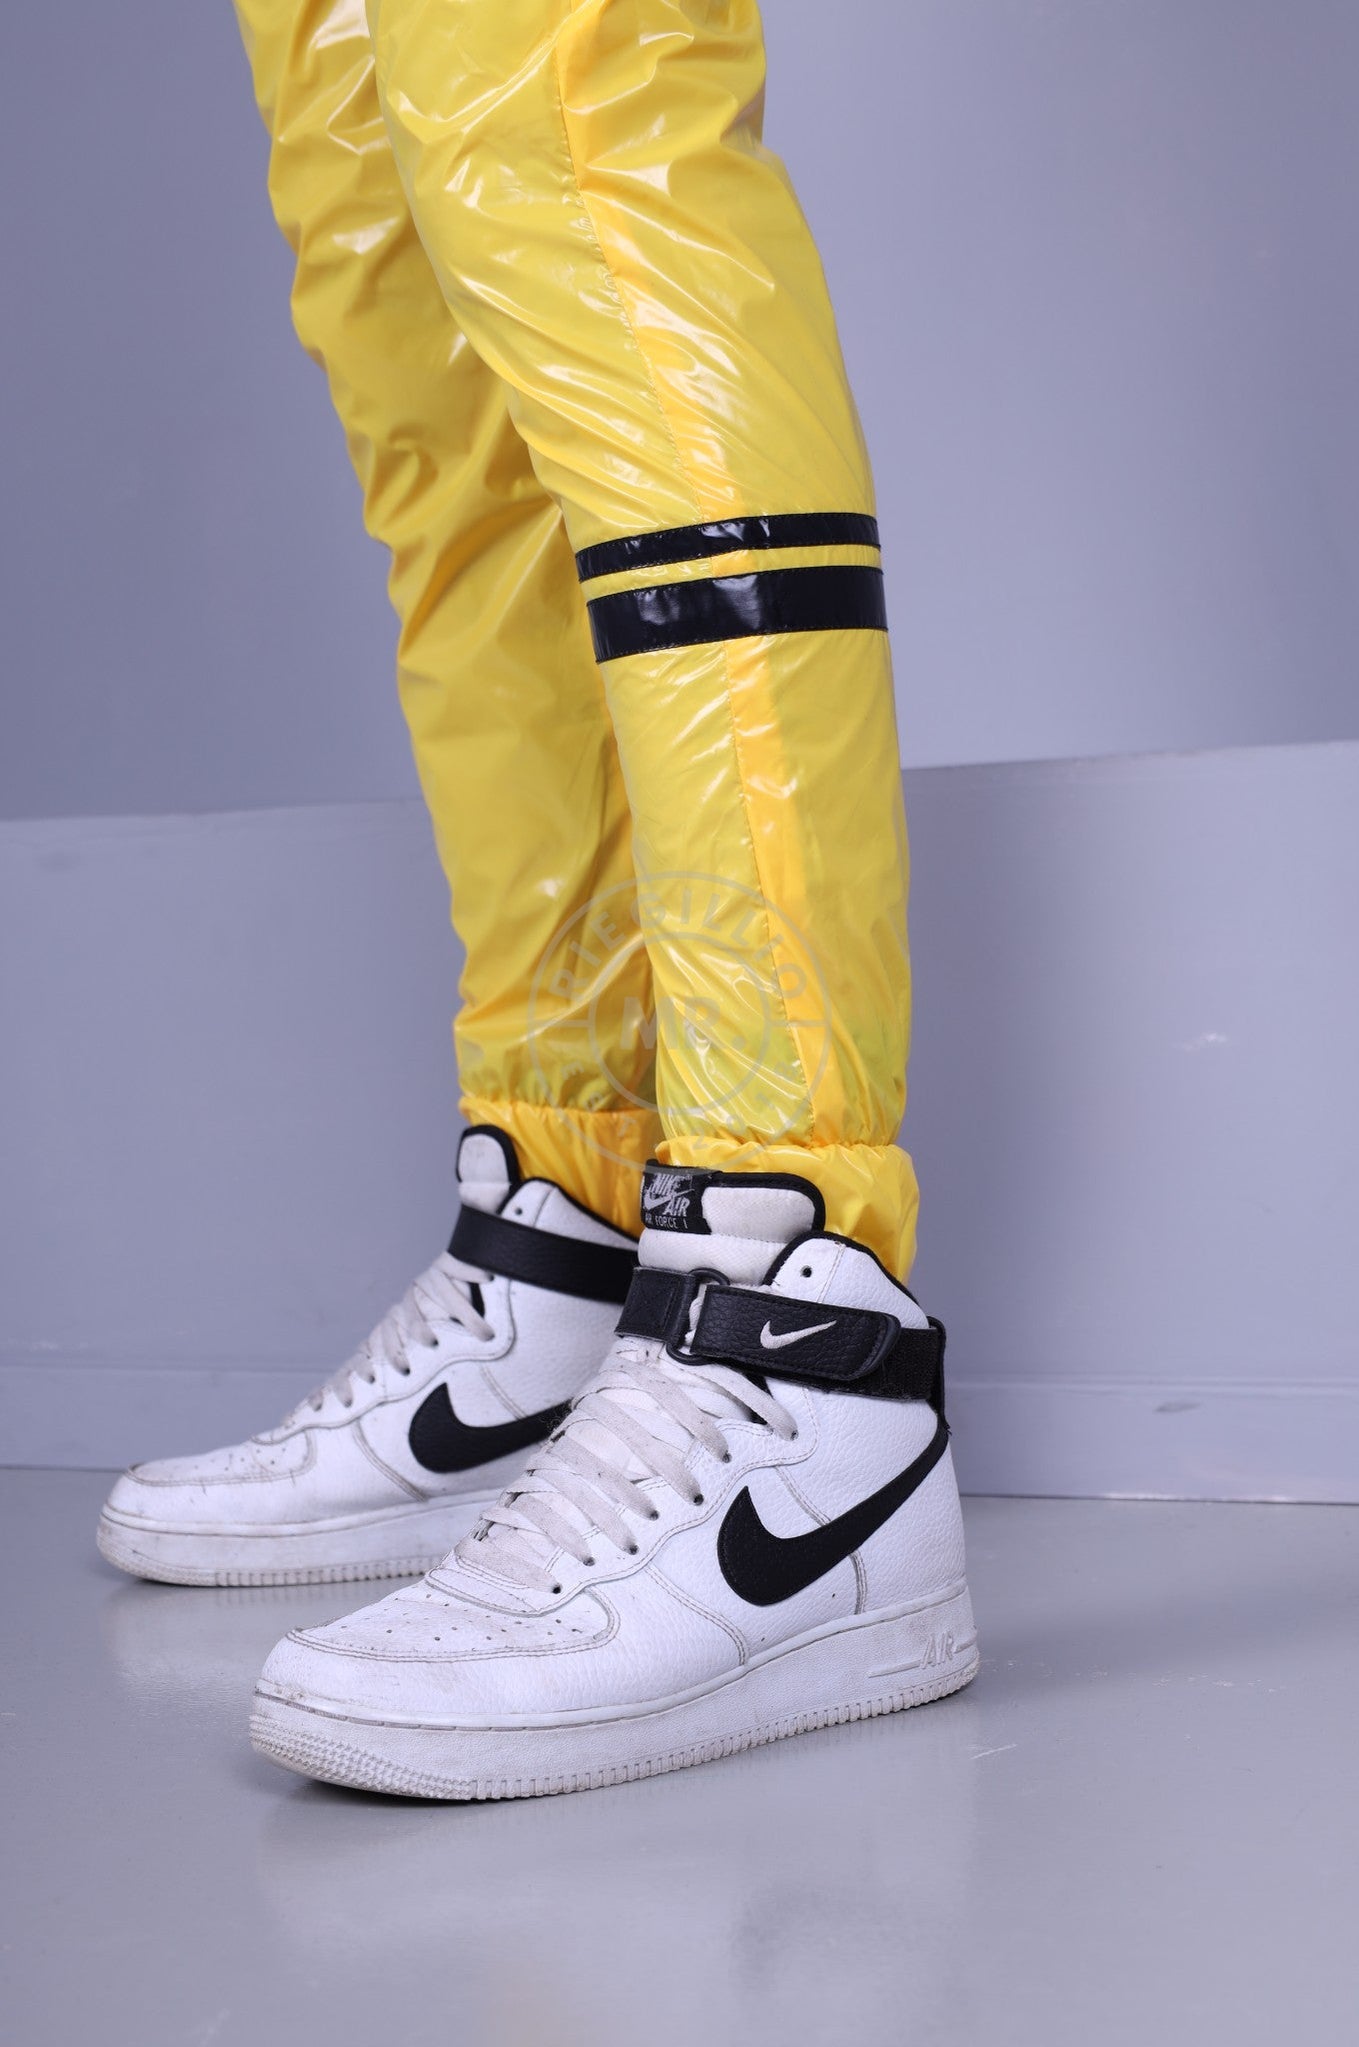 Shiny Nylon Tracksuit Pants - Yellow *DISCONTINUED ITEM*-at MR. Riegillio